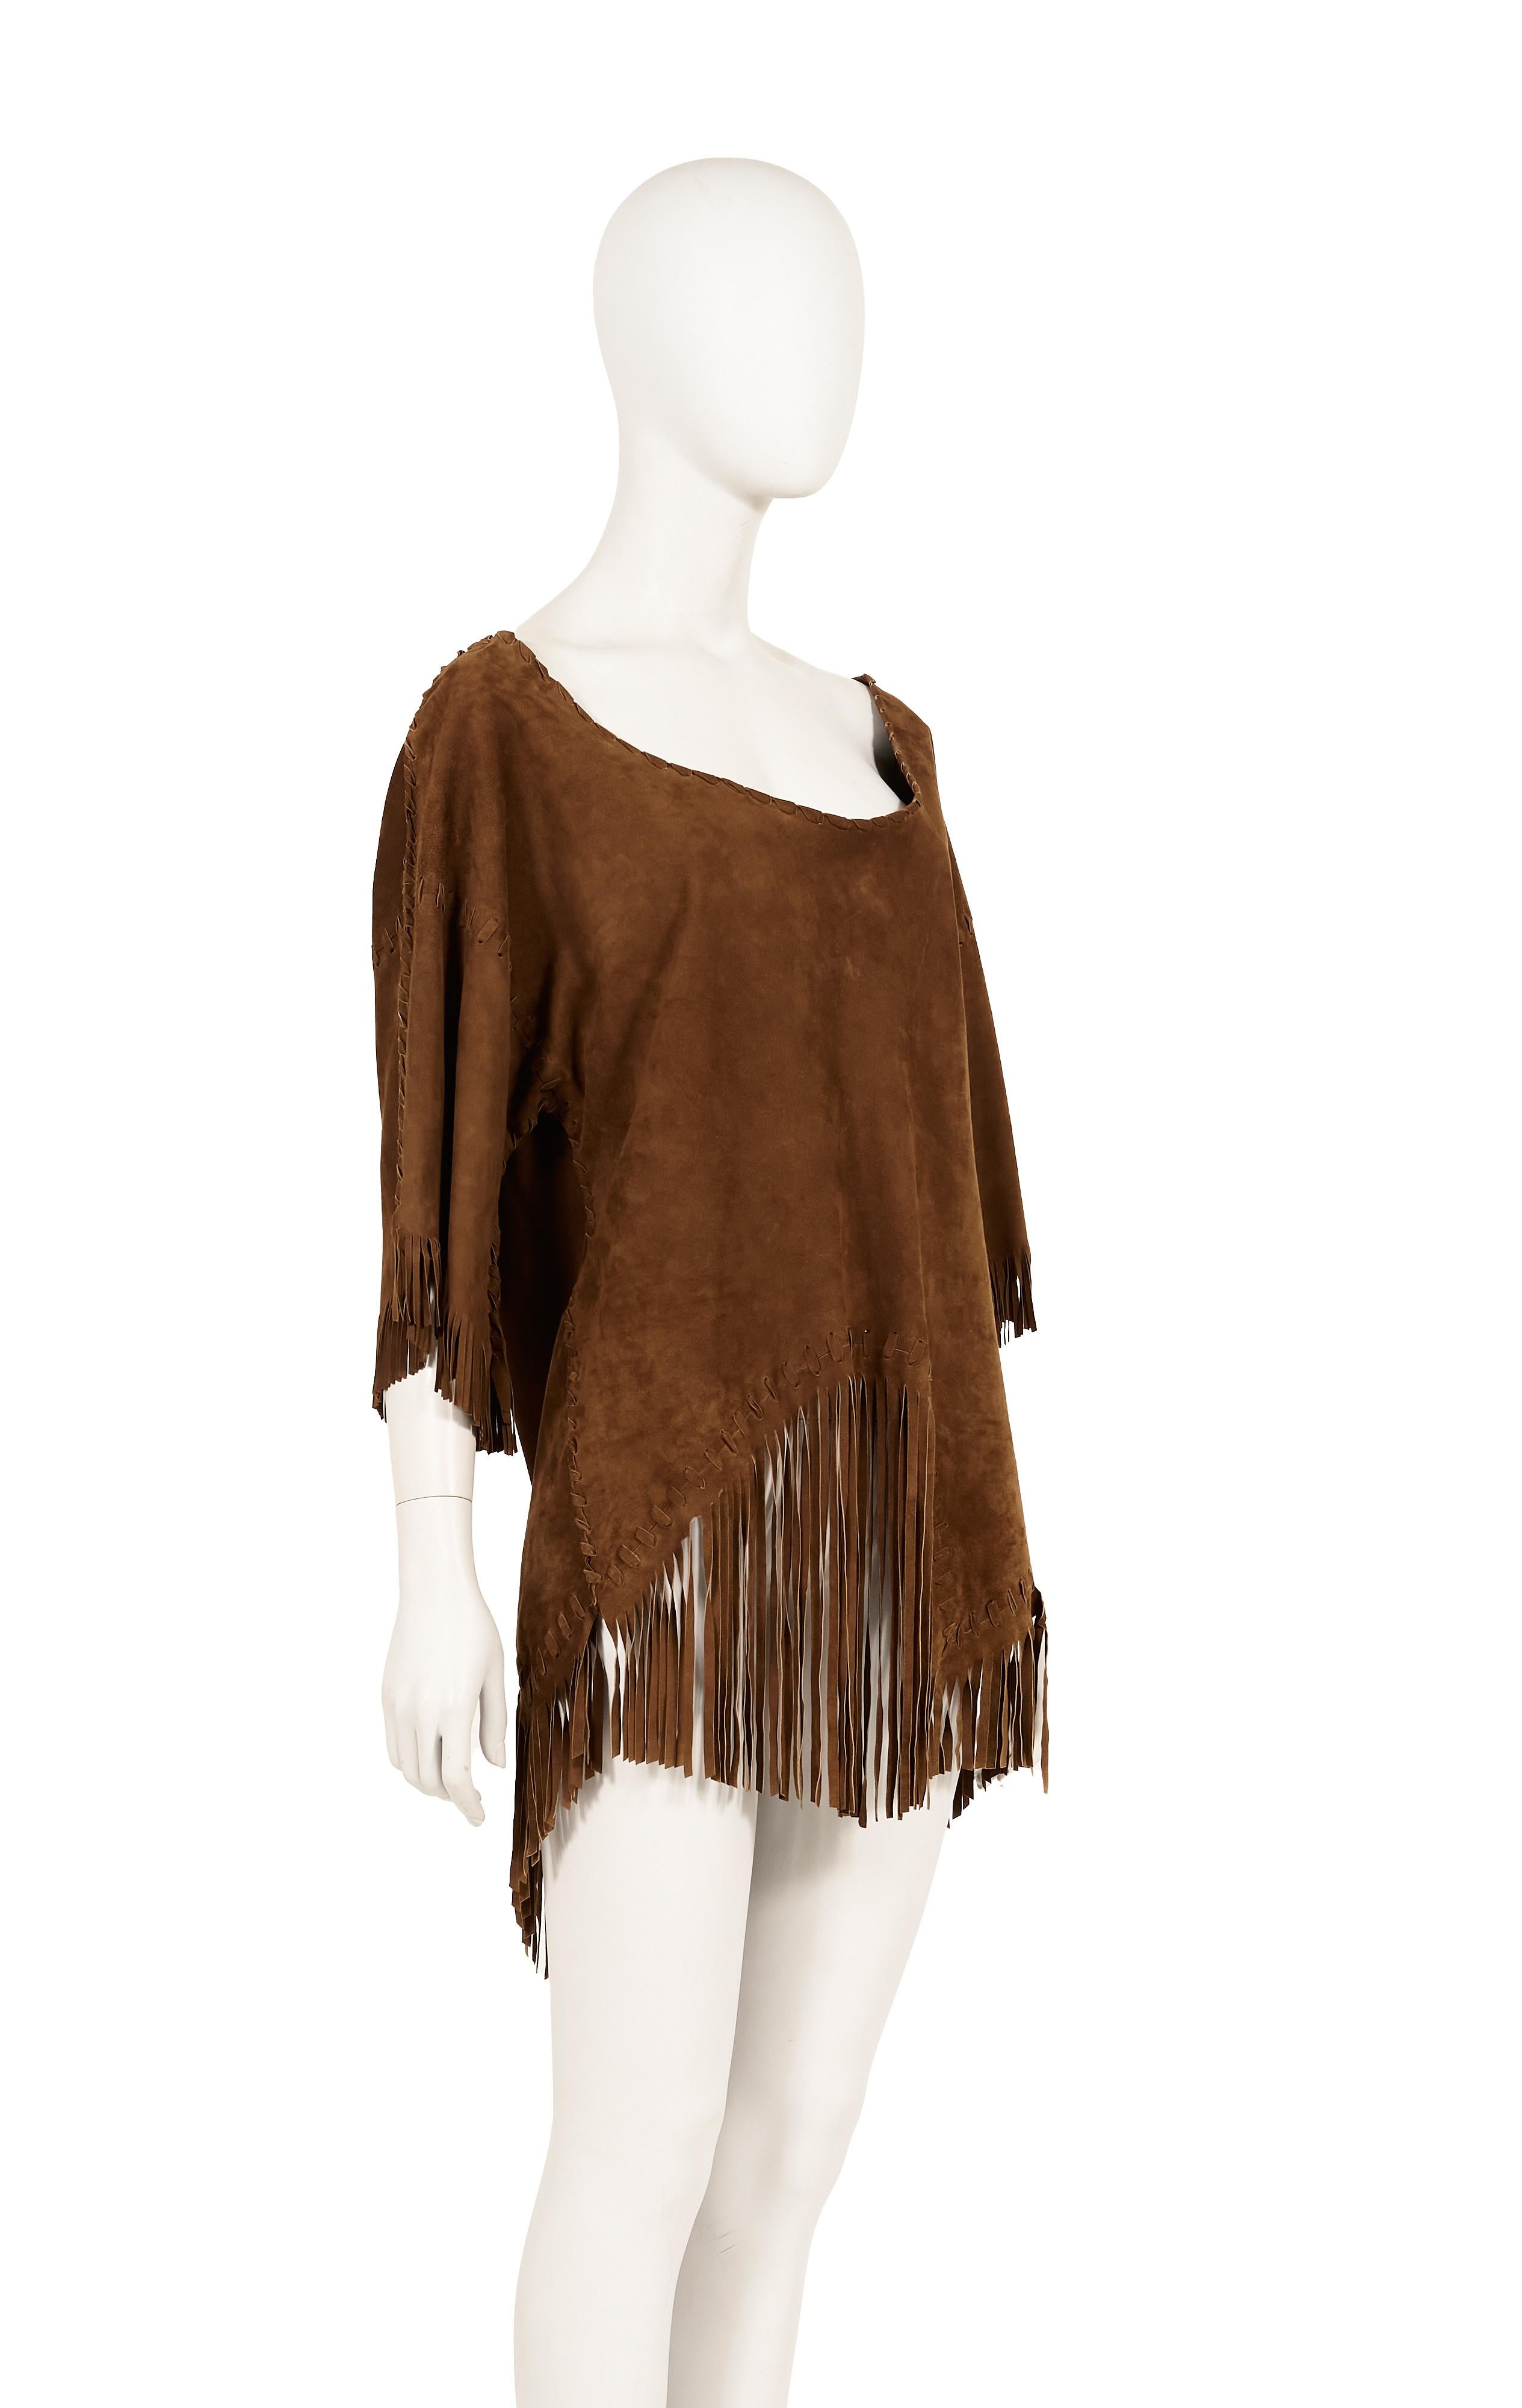 Women's Ralph Lauren S/S 2011 brown suede asymmetrical fringe top For Sale